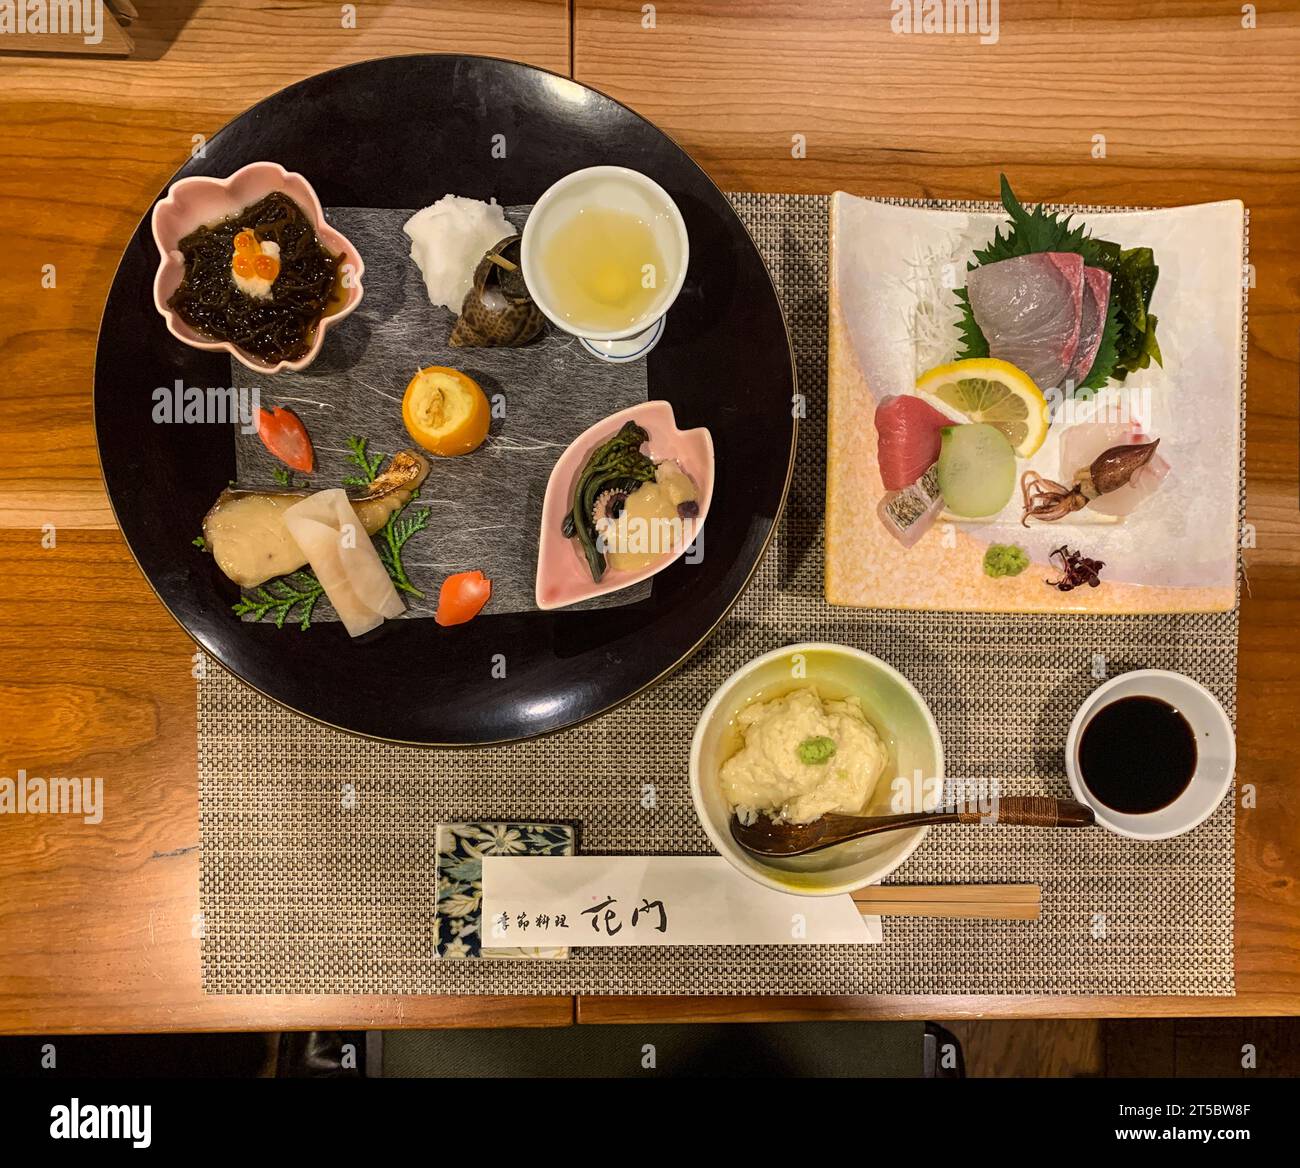 Japan, Kyushu, Hita. Seafood Dinner. Stock Photo